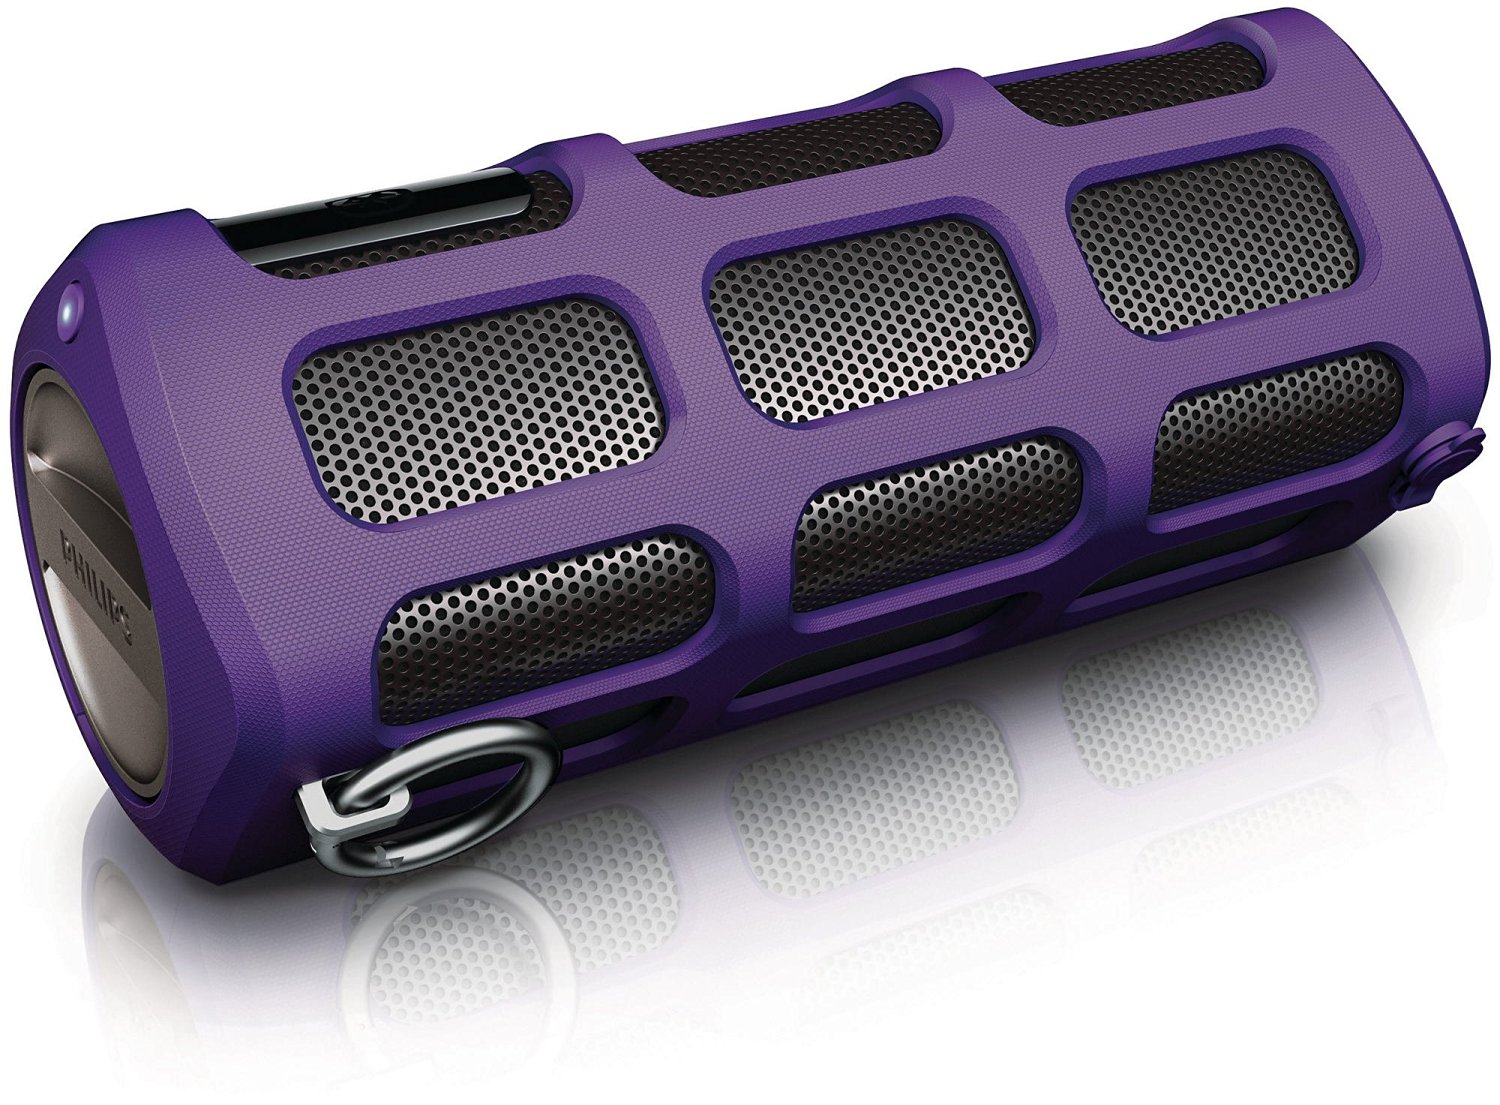 Loa Philips Shoqbox Portable Bluetooth Speaker SB7260/37 (Purple)